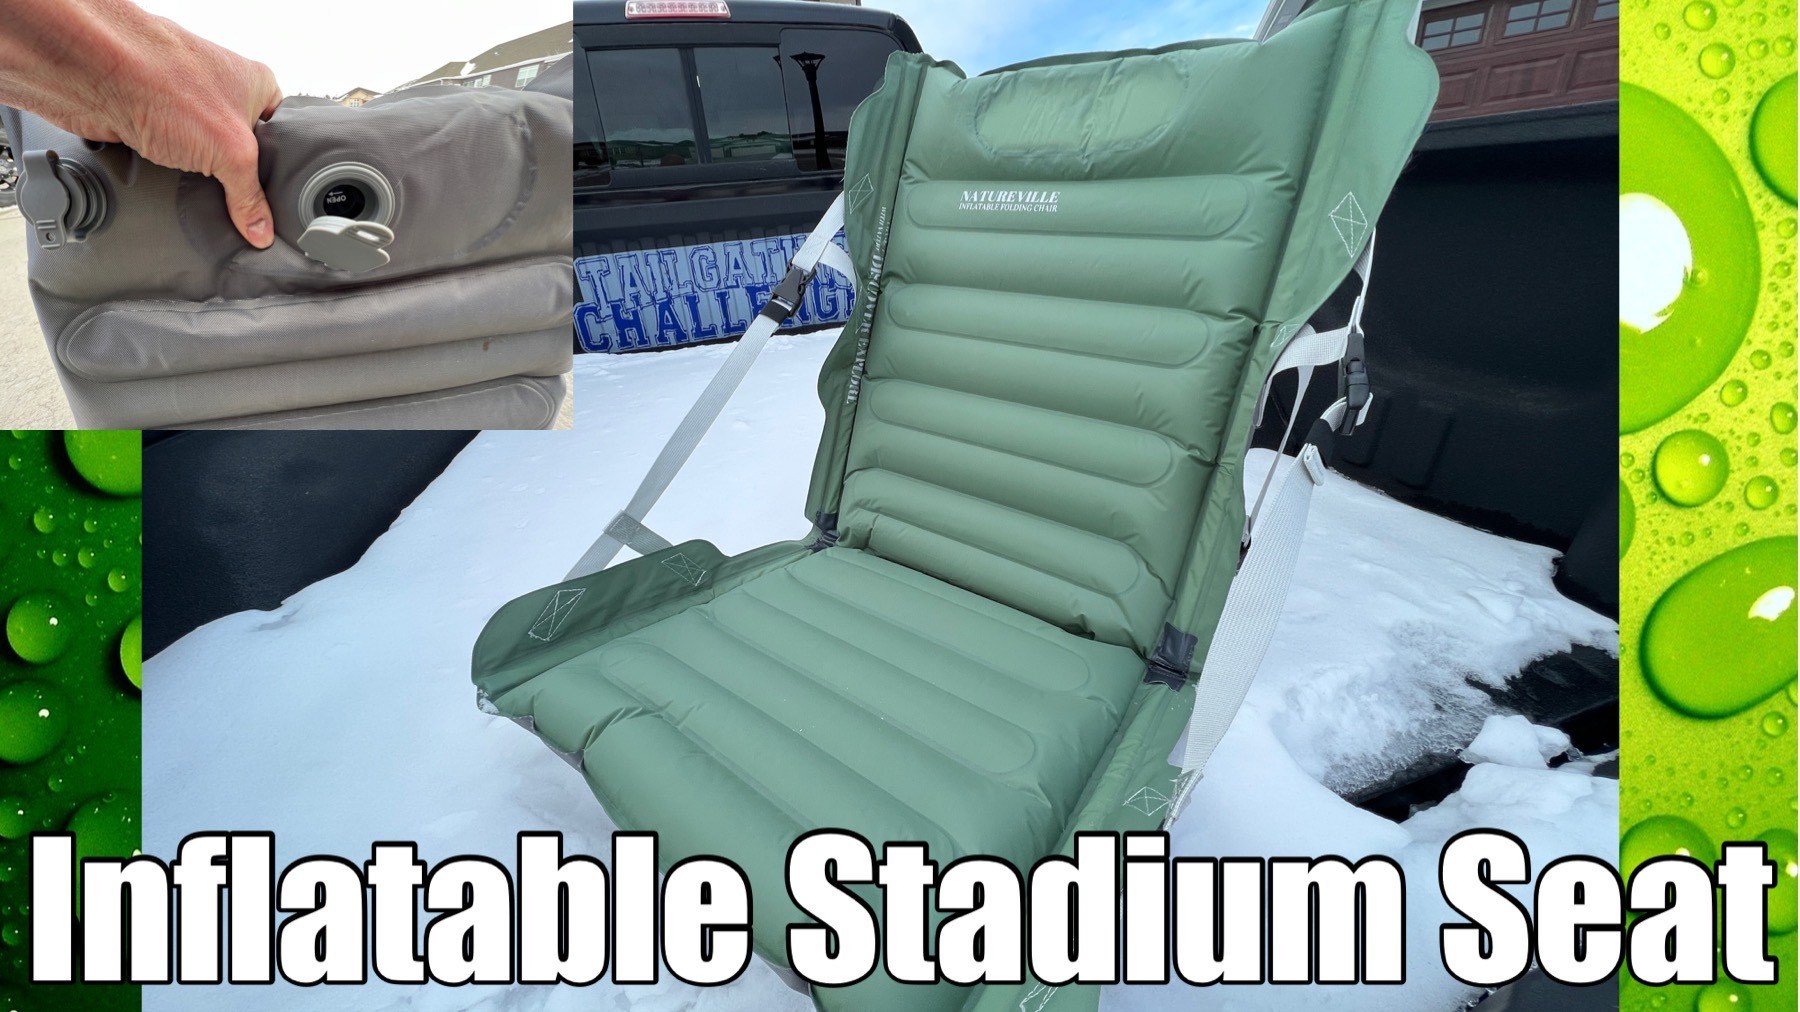 diy stadium seat cushion  Do-It-Yourself Advice Blog.